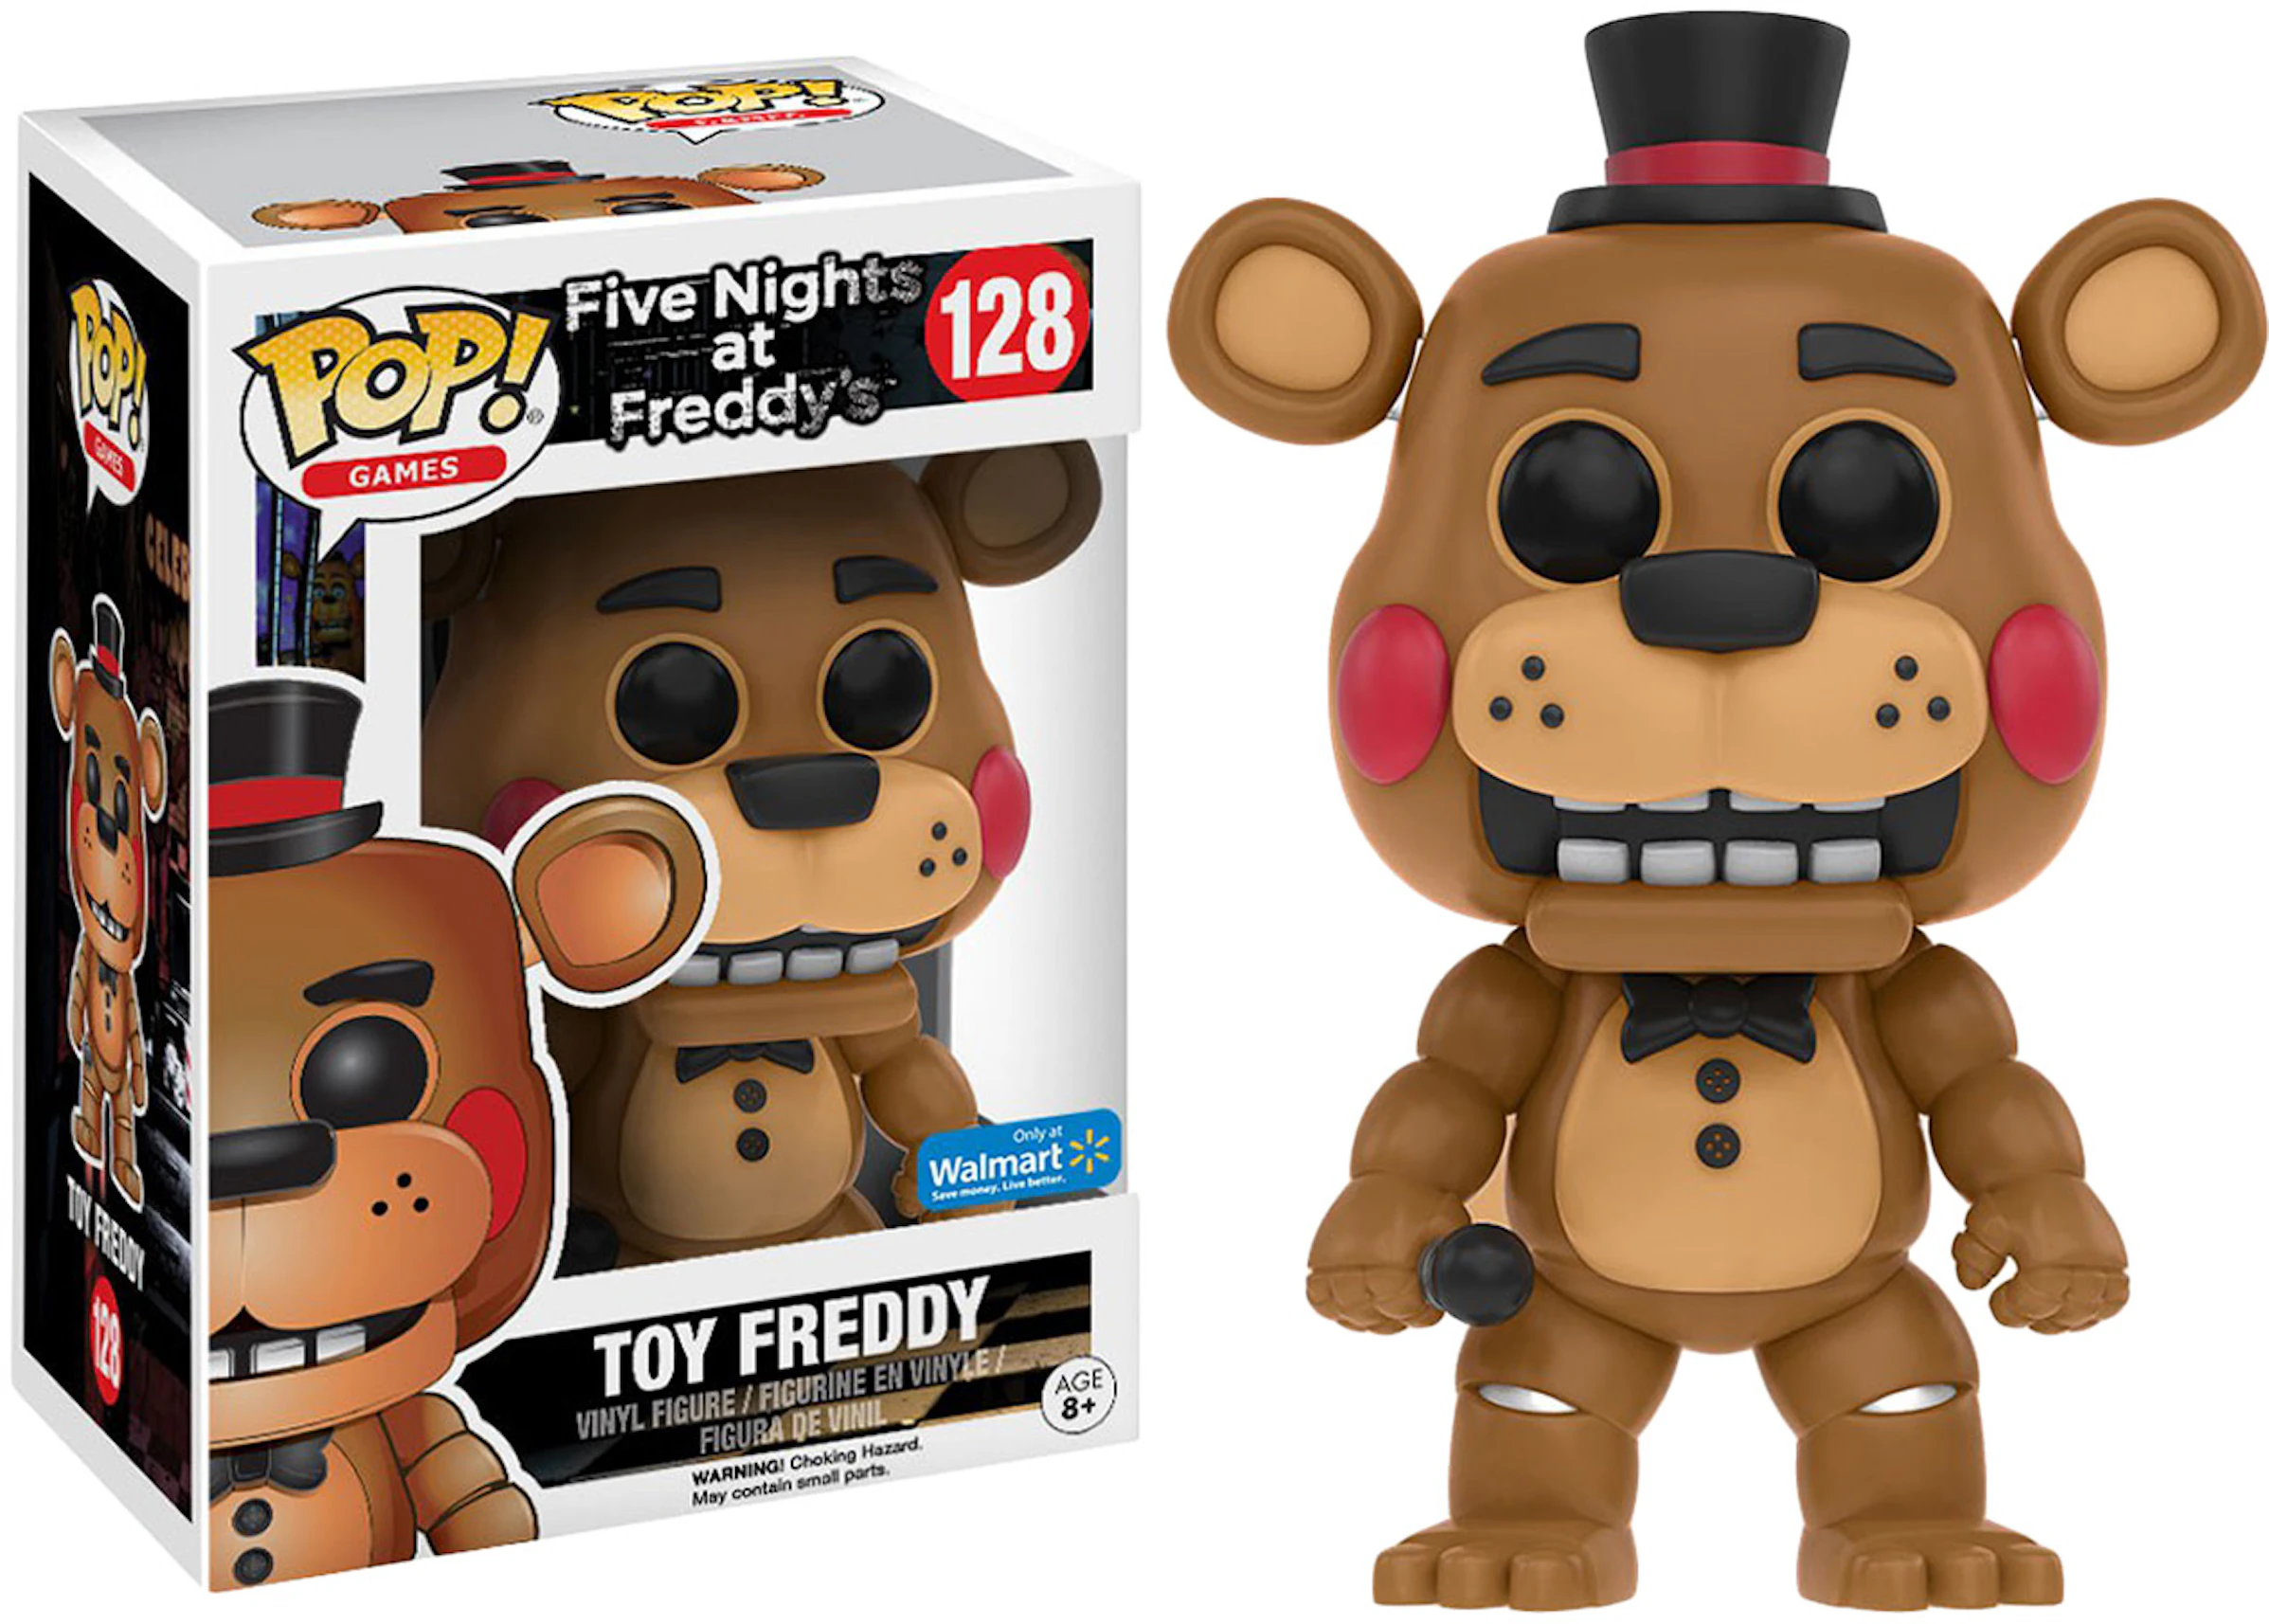 Parana rivier Minister Voorbeeld Funko Pop! Games Five Nights at Freddy's Toy Freddy Walmart Exclusive  Figure #128 - US